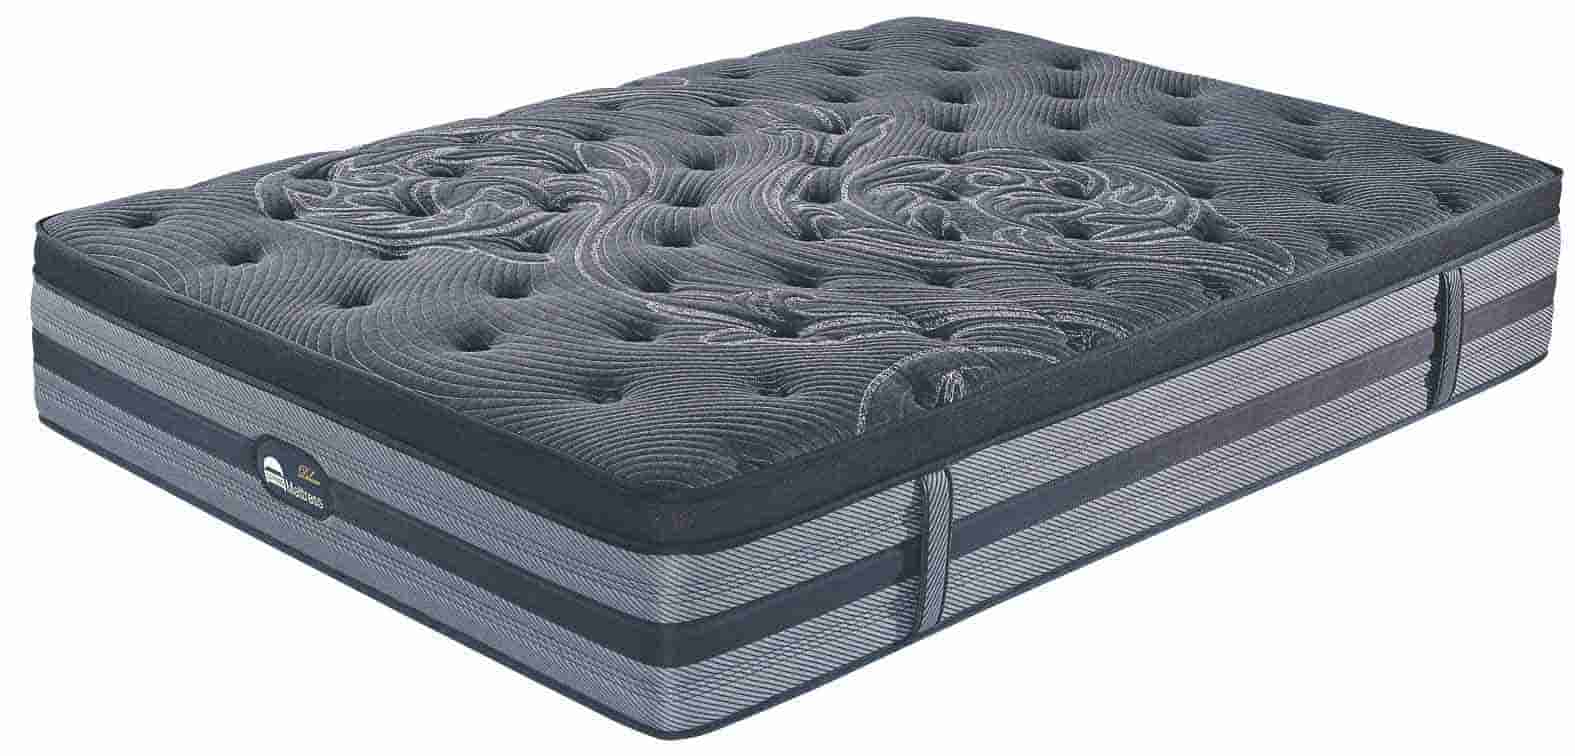 Natural Latex Mattresses Household Sleep Well Latex Memory Foam Mattress